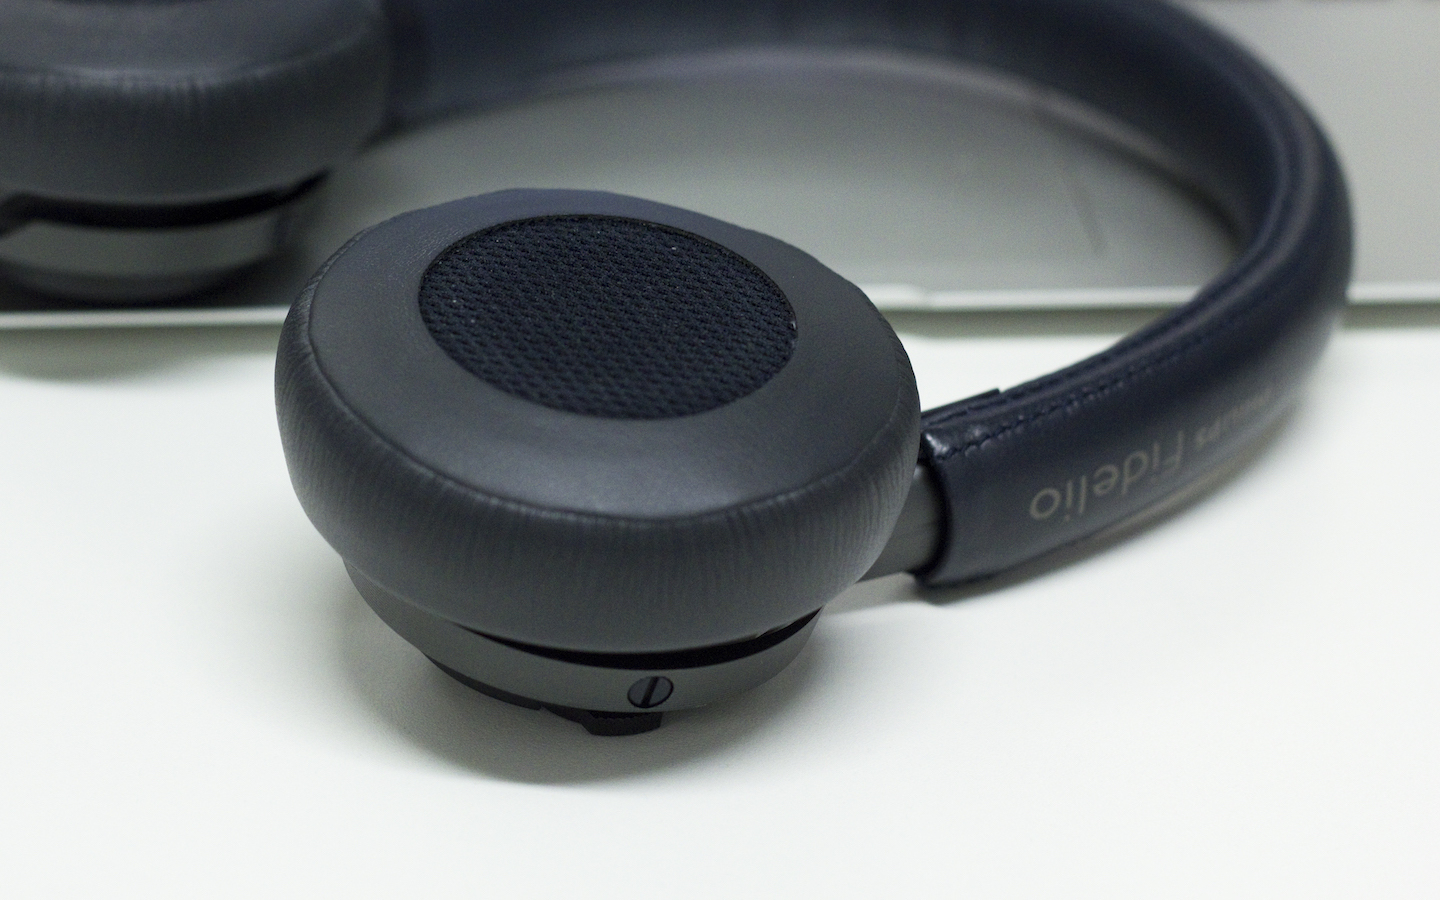 Philips Fidelio M1BT review: great-sounding Bluetooth headphones, Gadgets